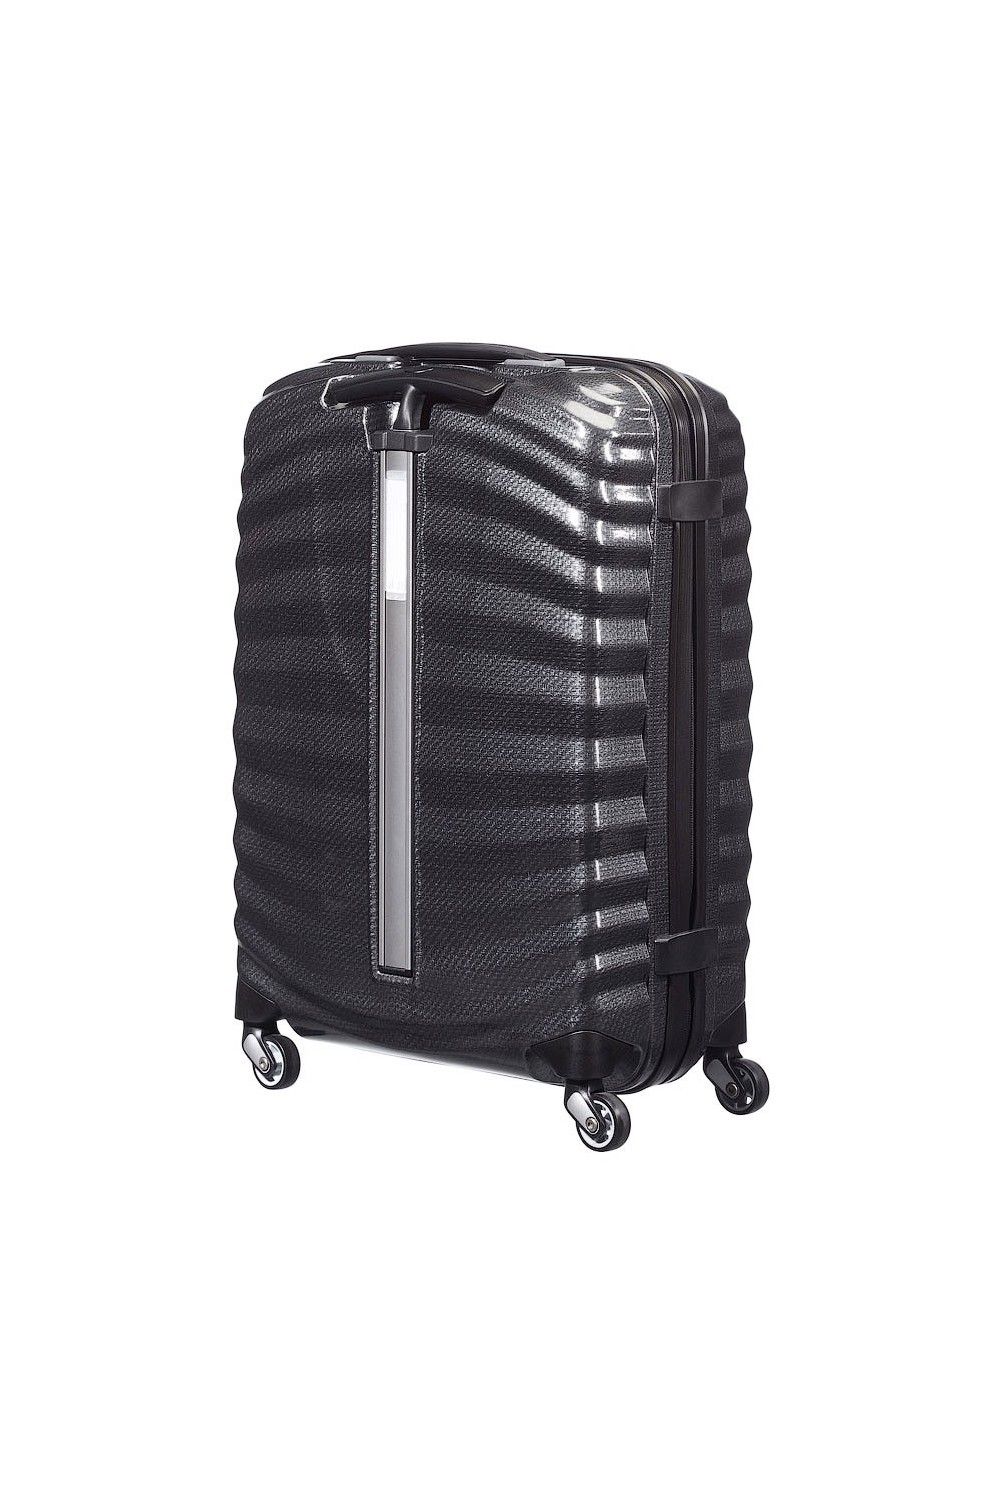 Samsonite Suitcase Lite Shock 81cm 124Liter 4 Wheel Black